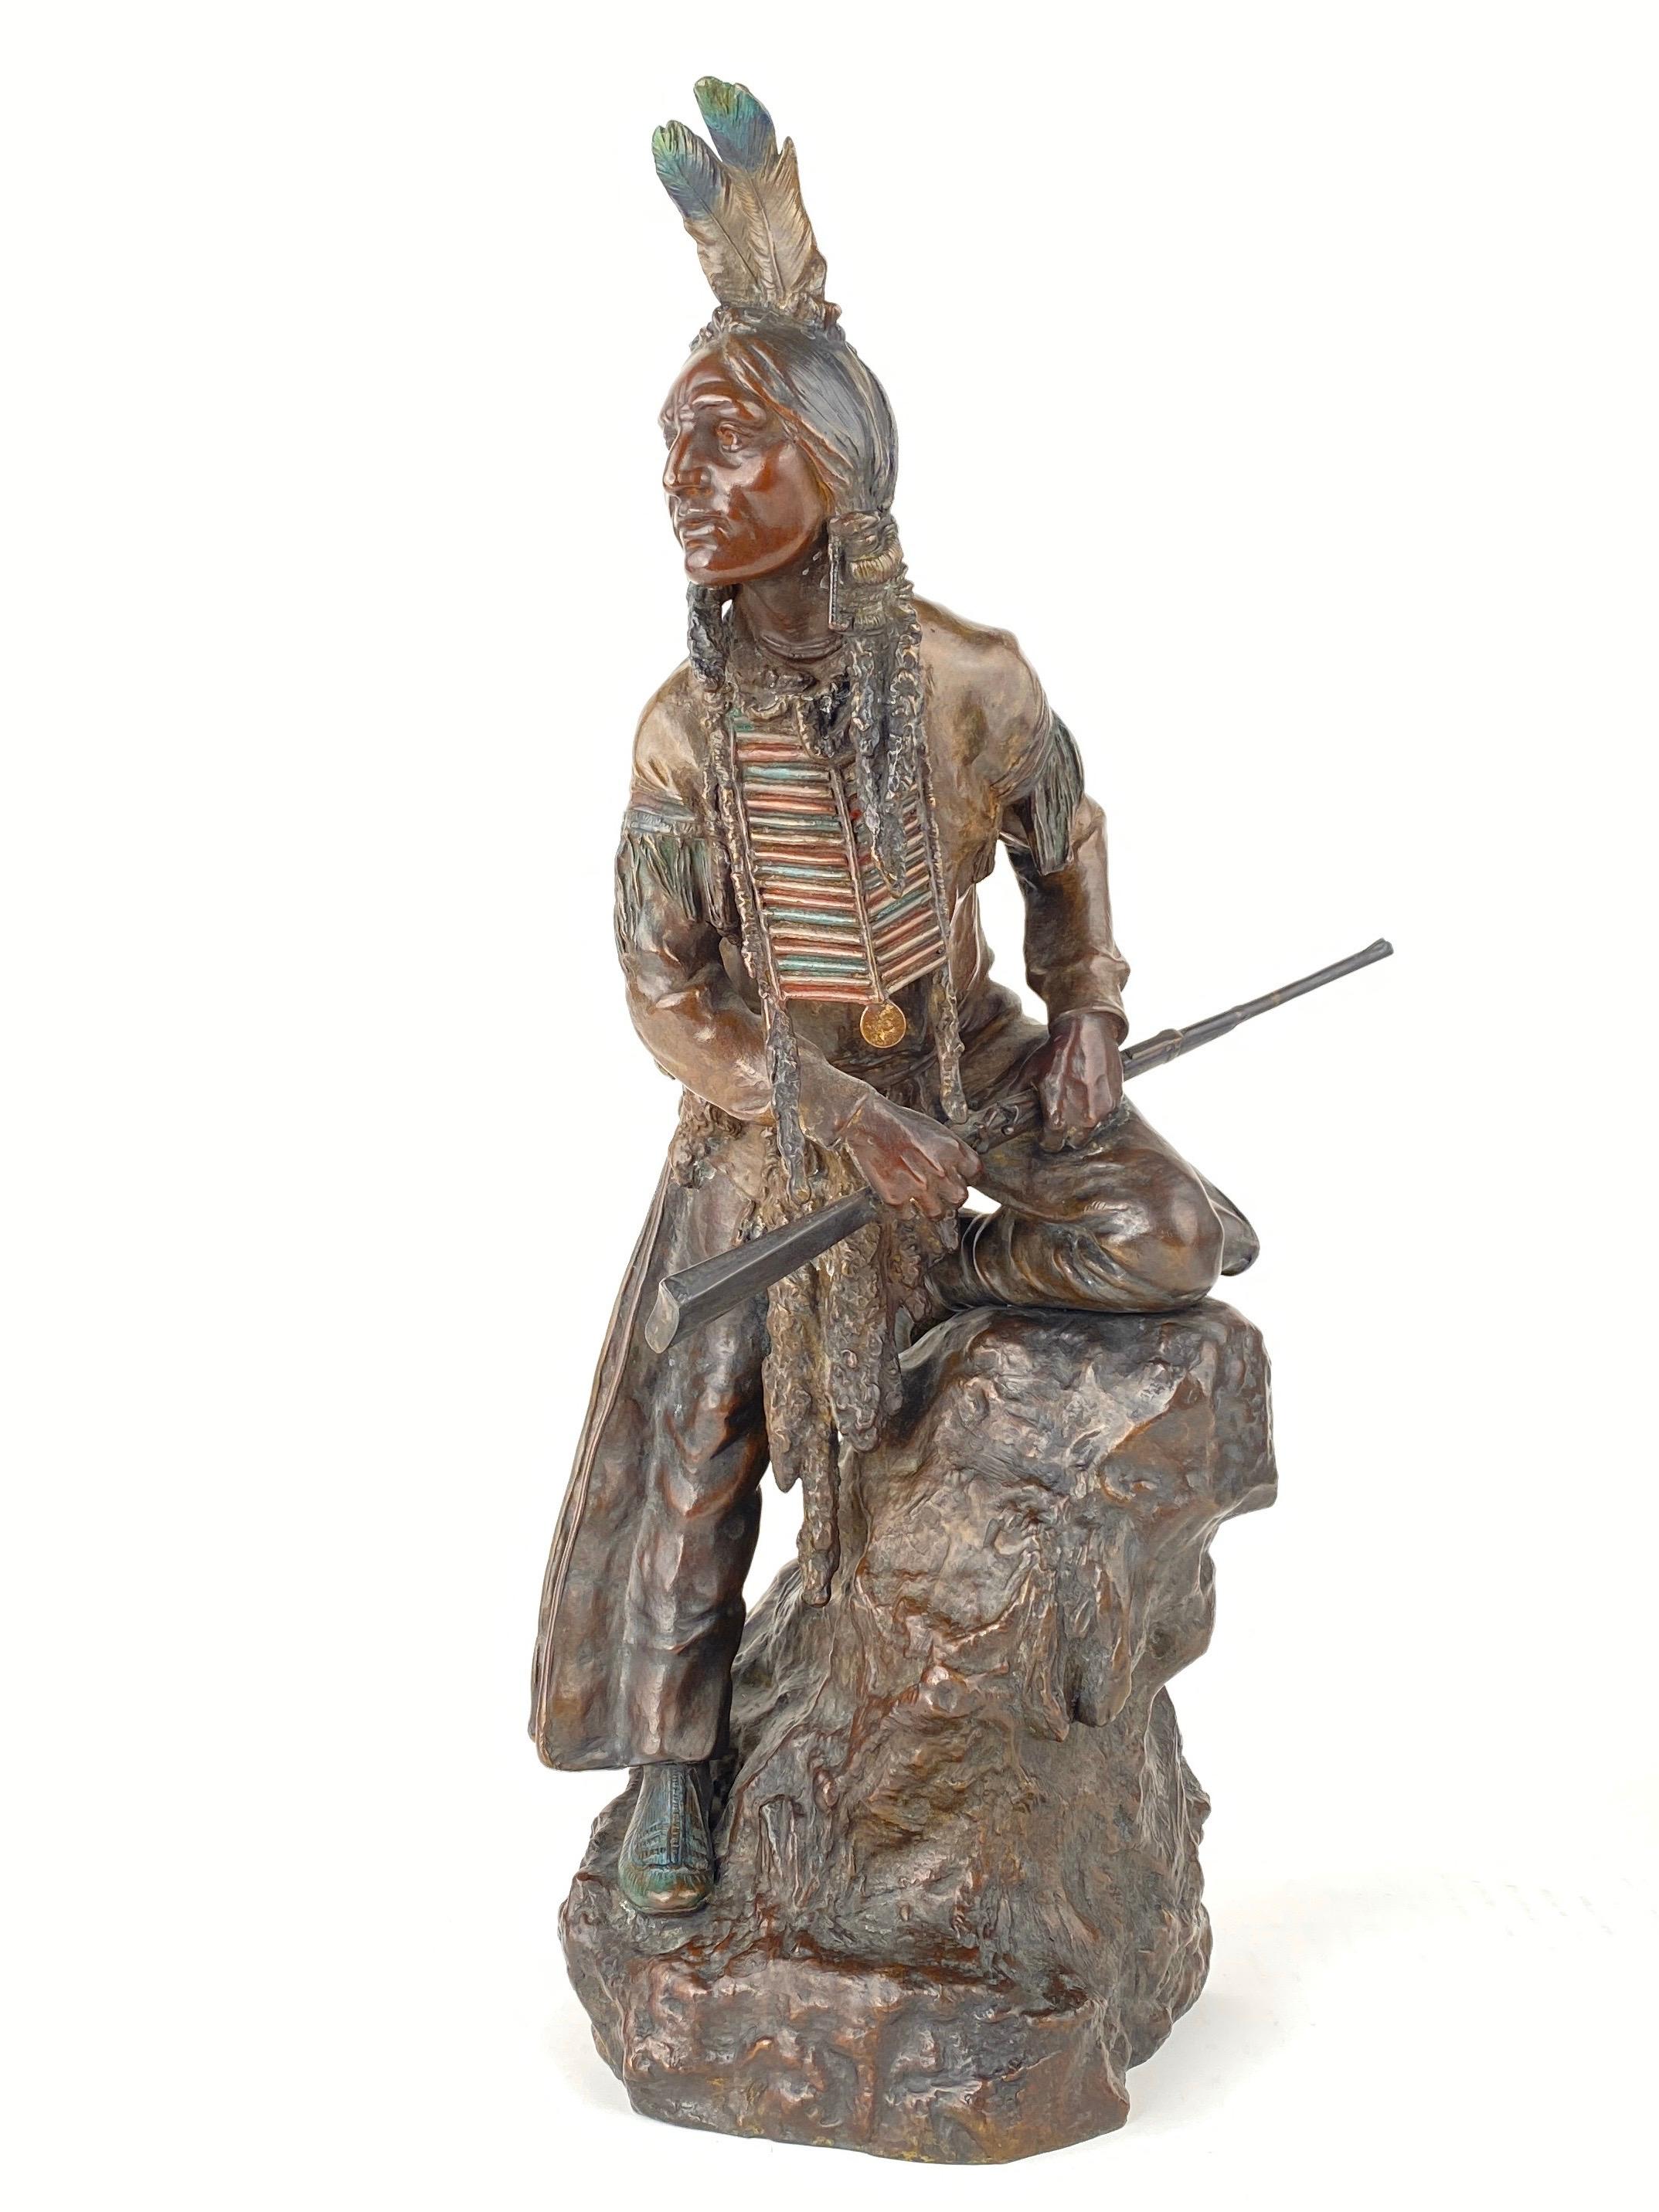 20th Century Austrian Art Nouveau American Indian Bronze “The Scout” by, Carl Kauba